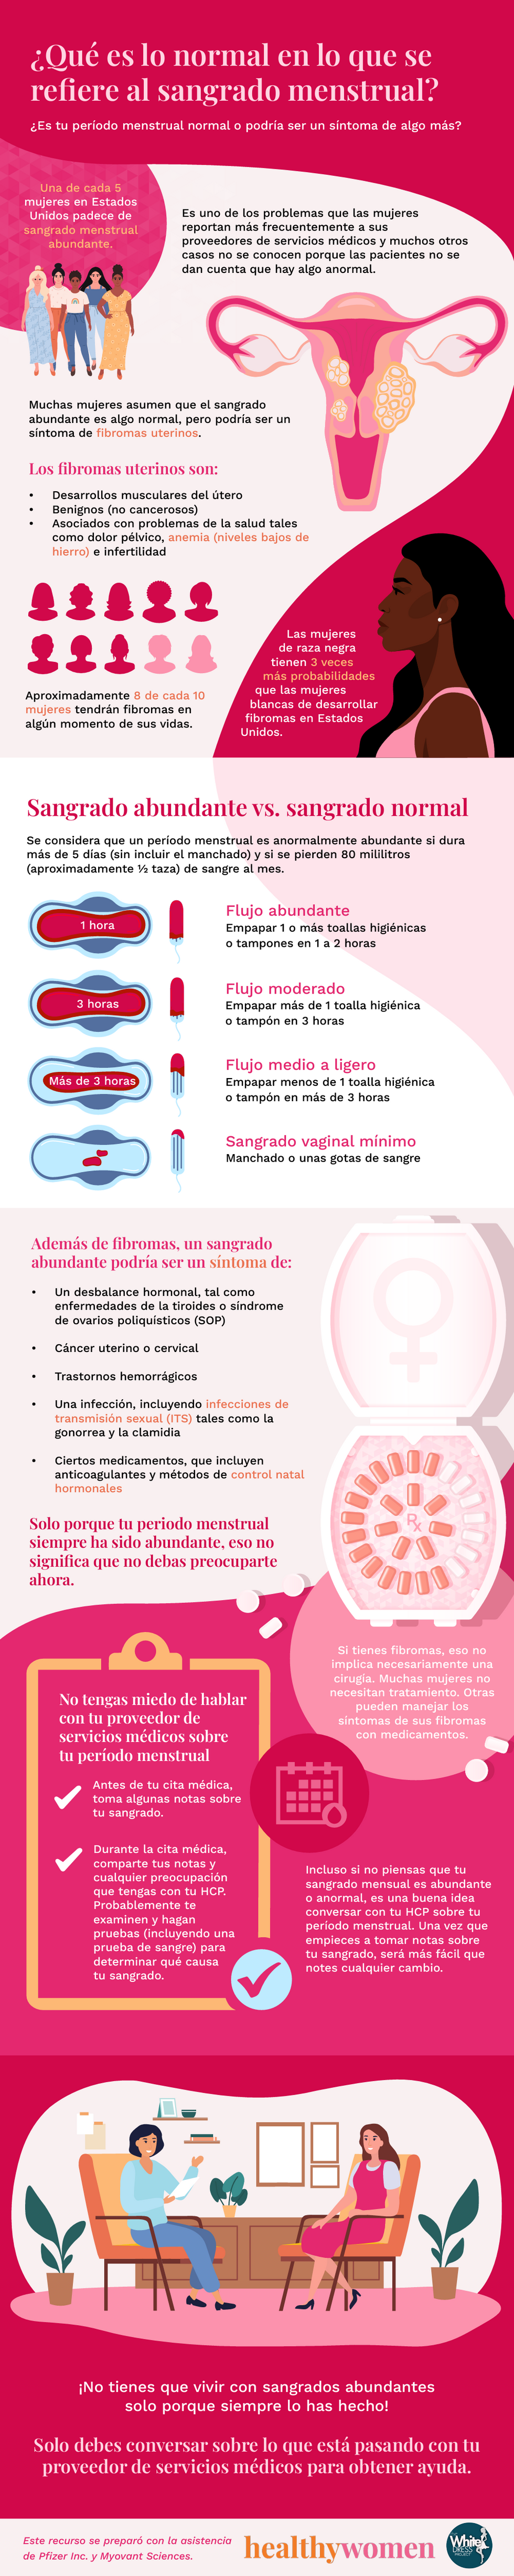 Spanish infographic on heavy menstrual bleeding